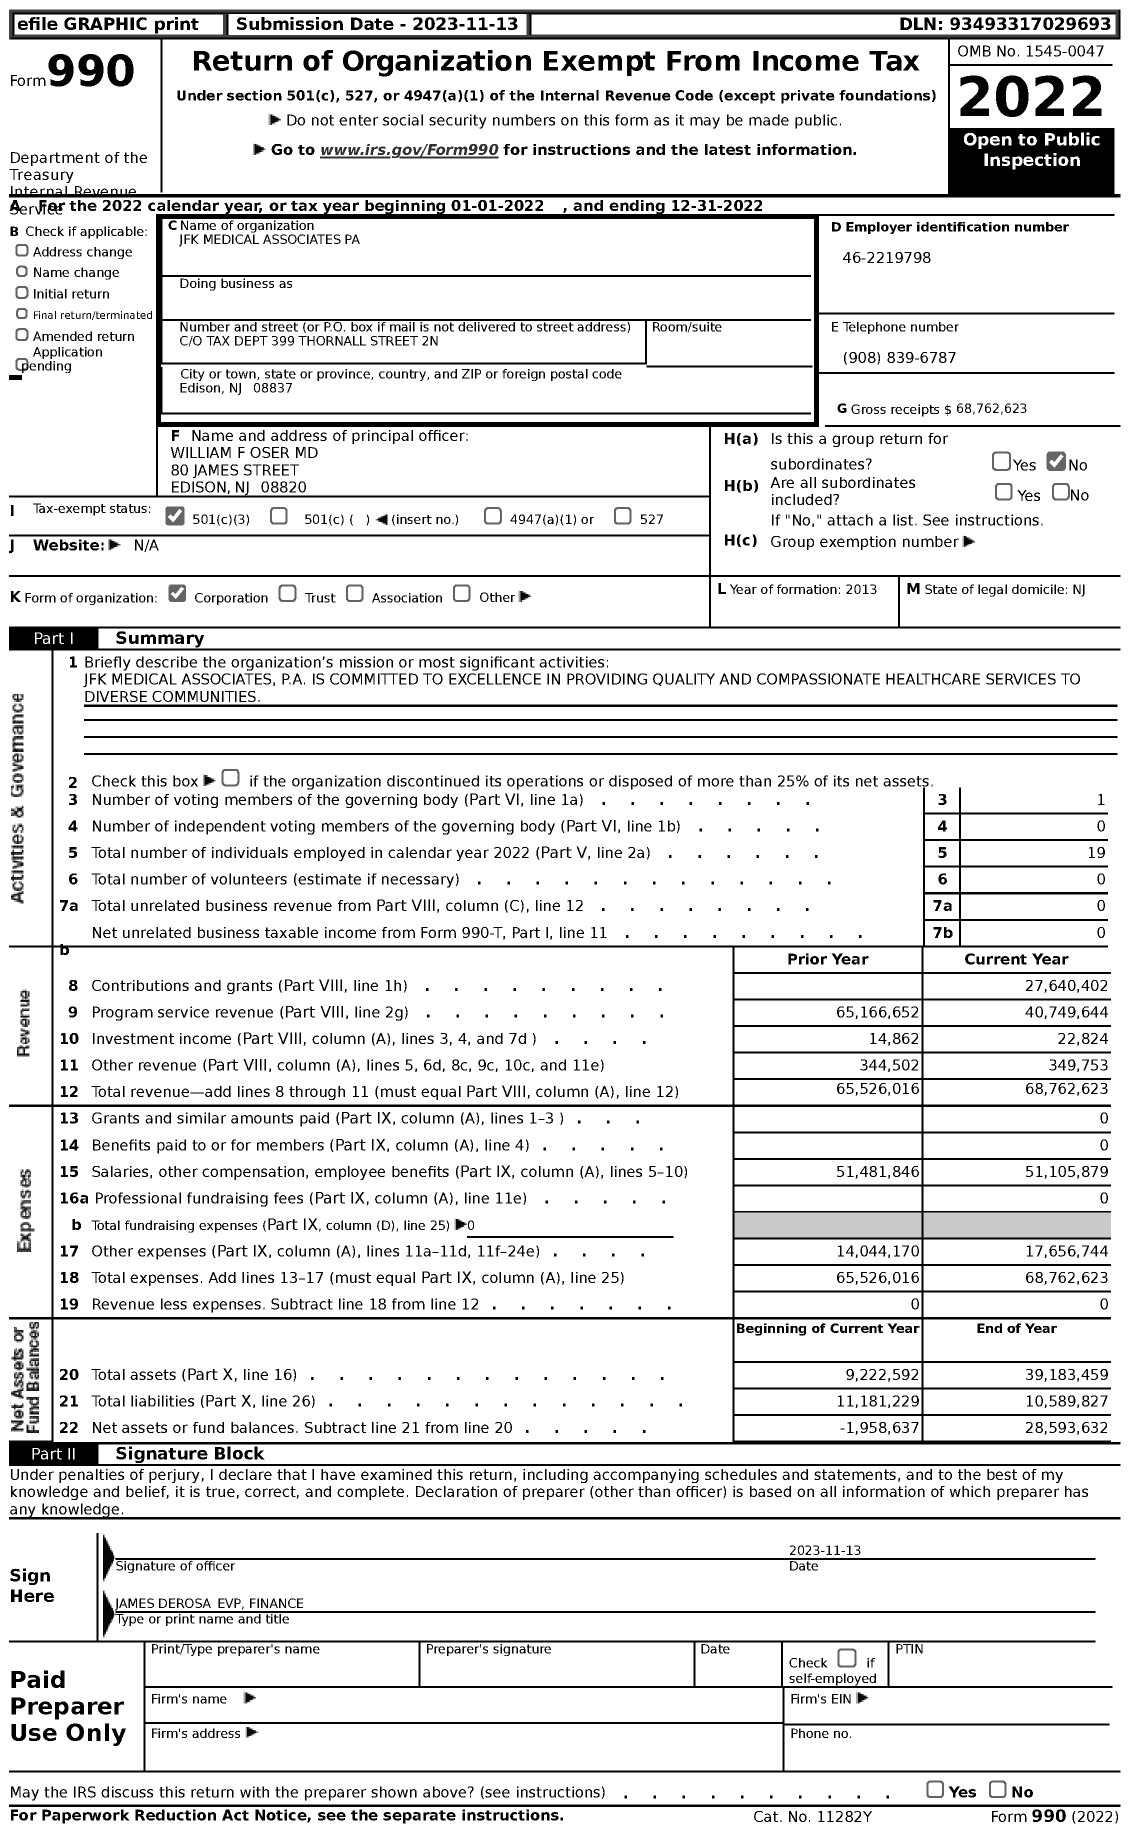 Image of first page of 2022 Form 990 for JFK Medical Associates (JFKMA)